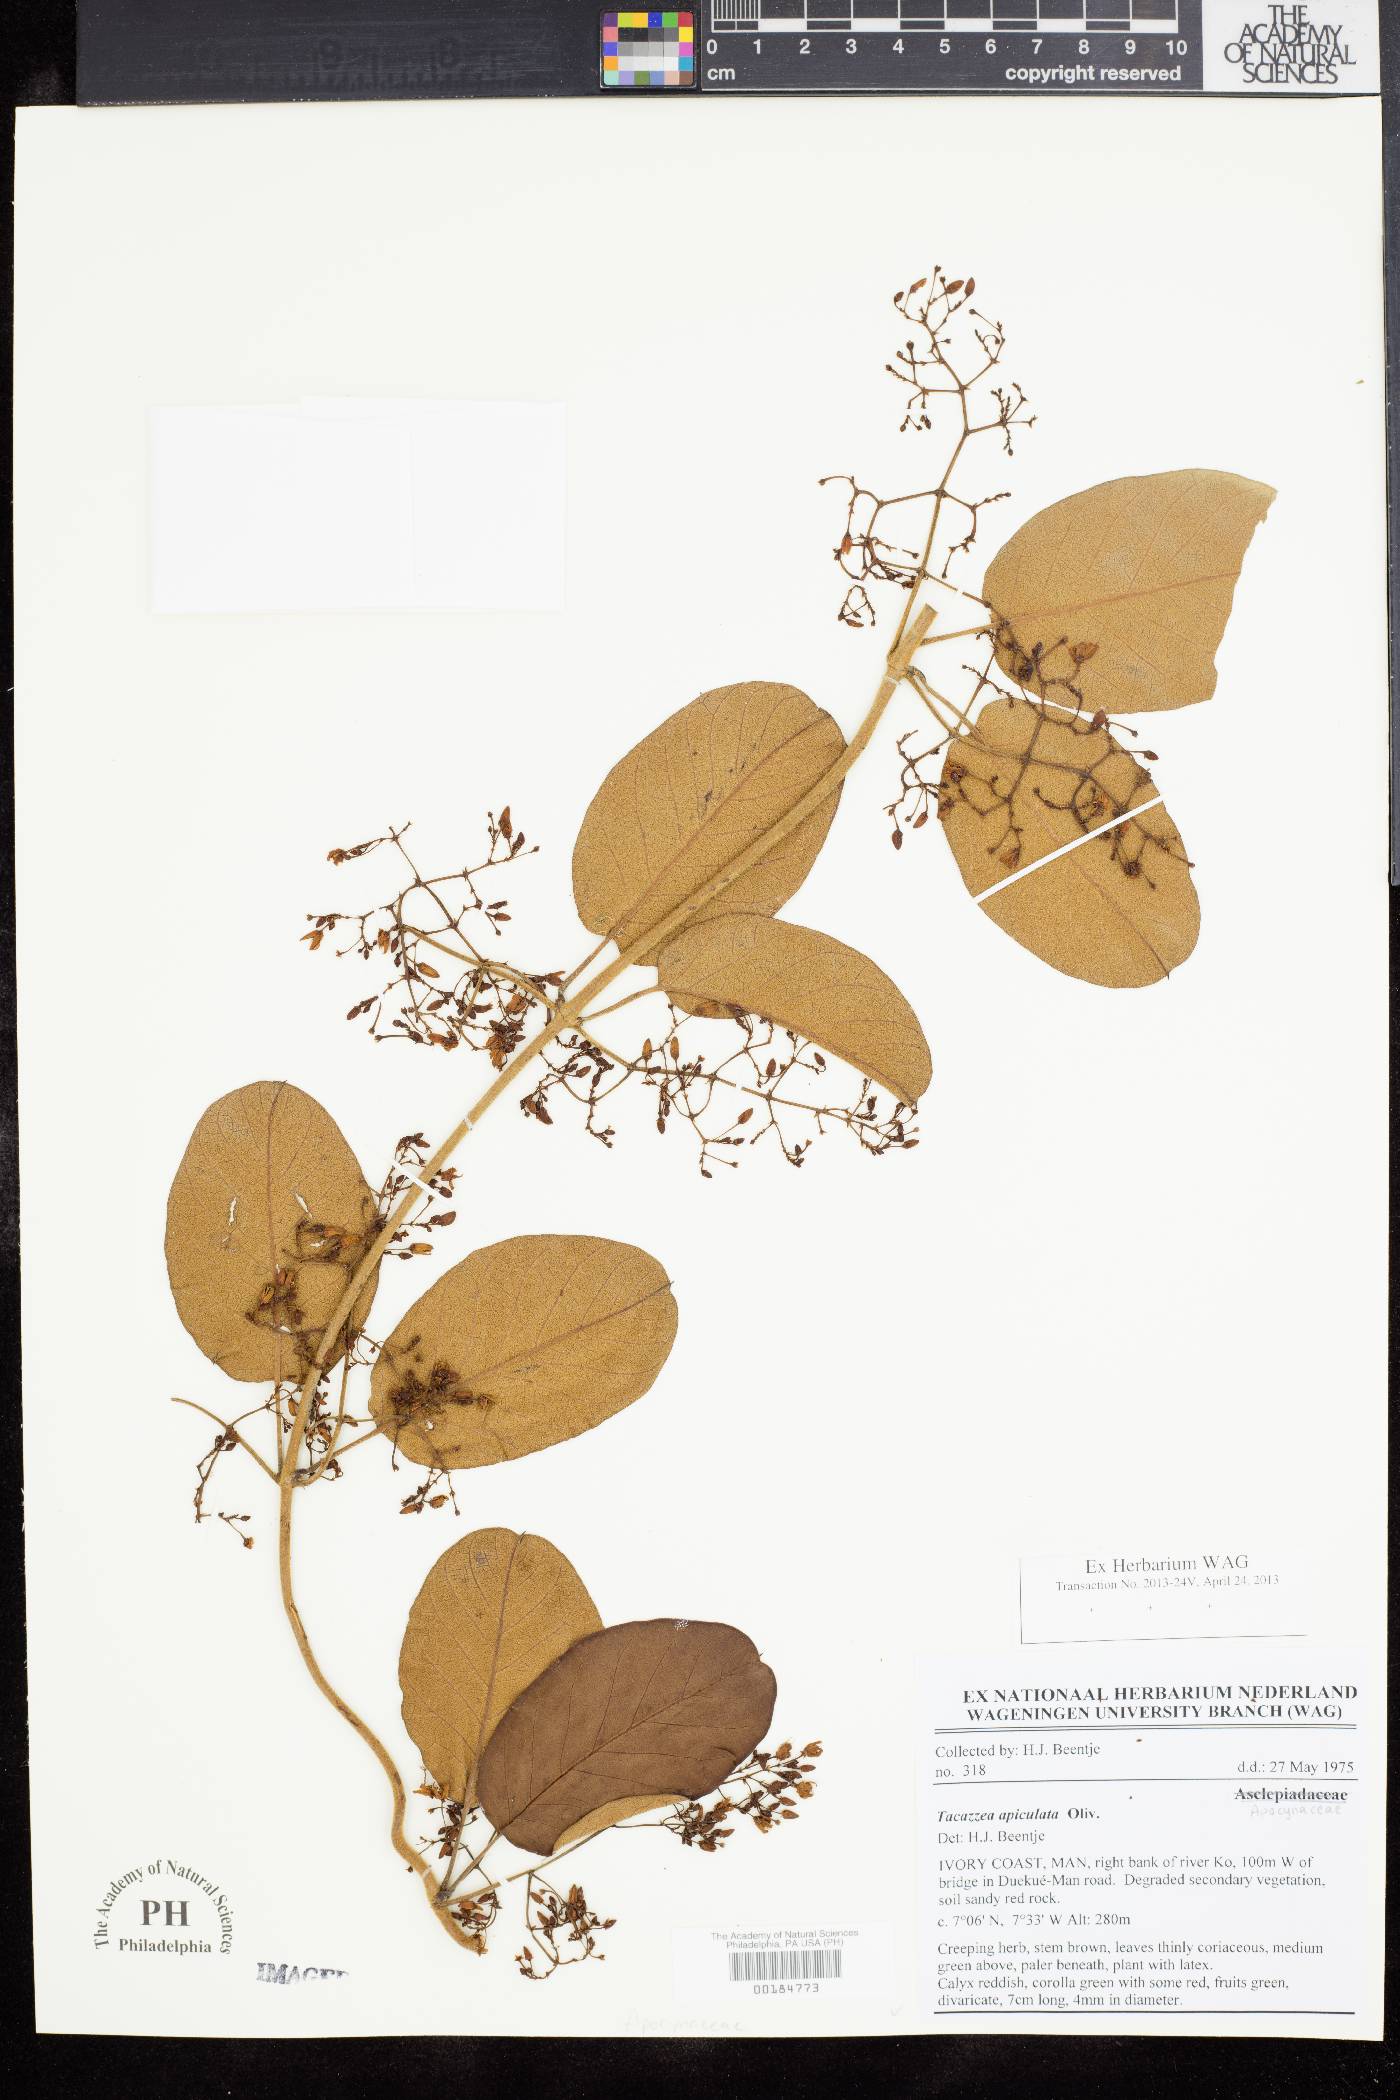 Tacazzea apiculata image